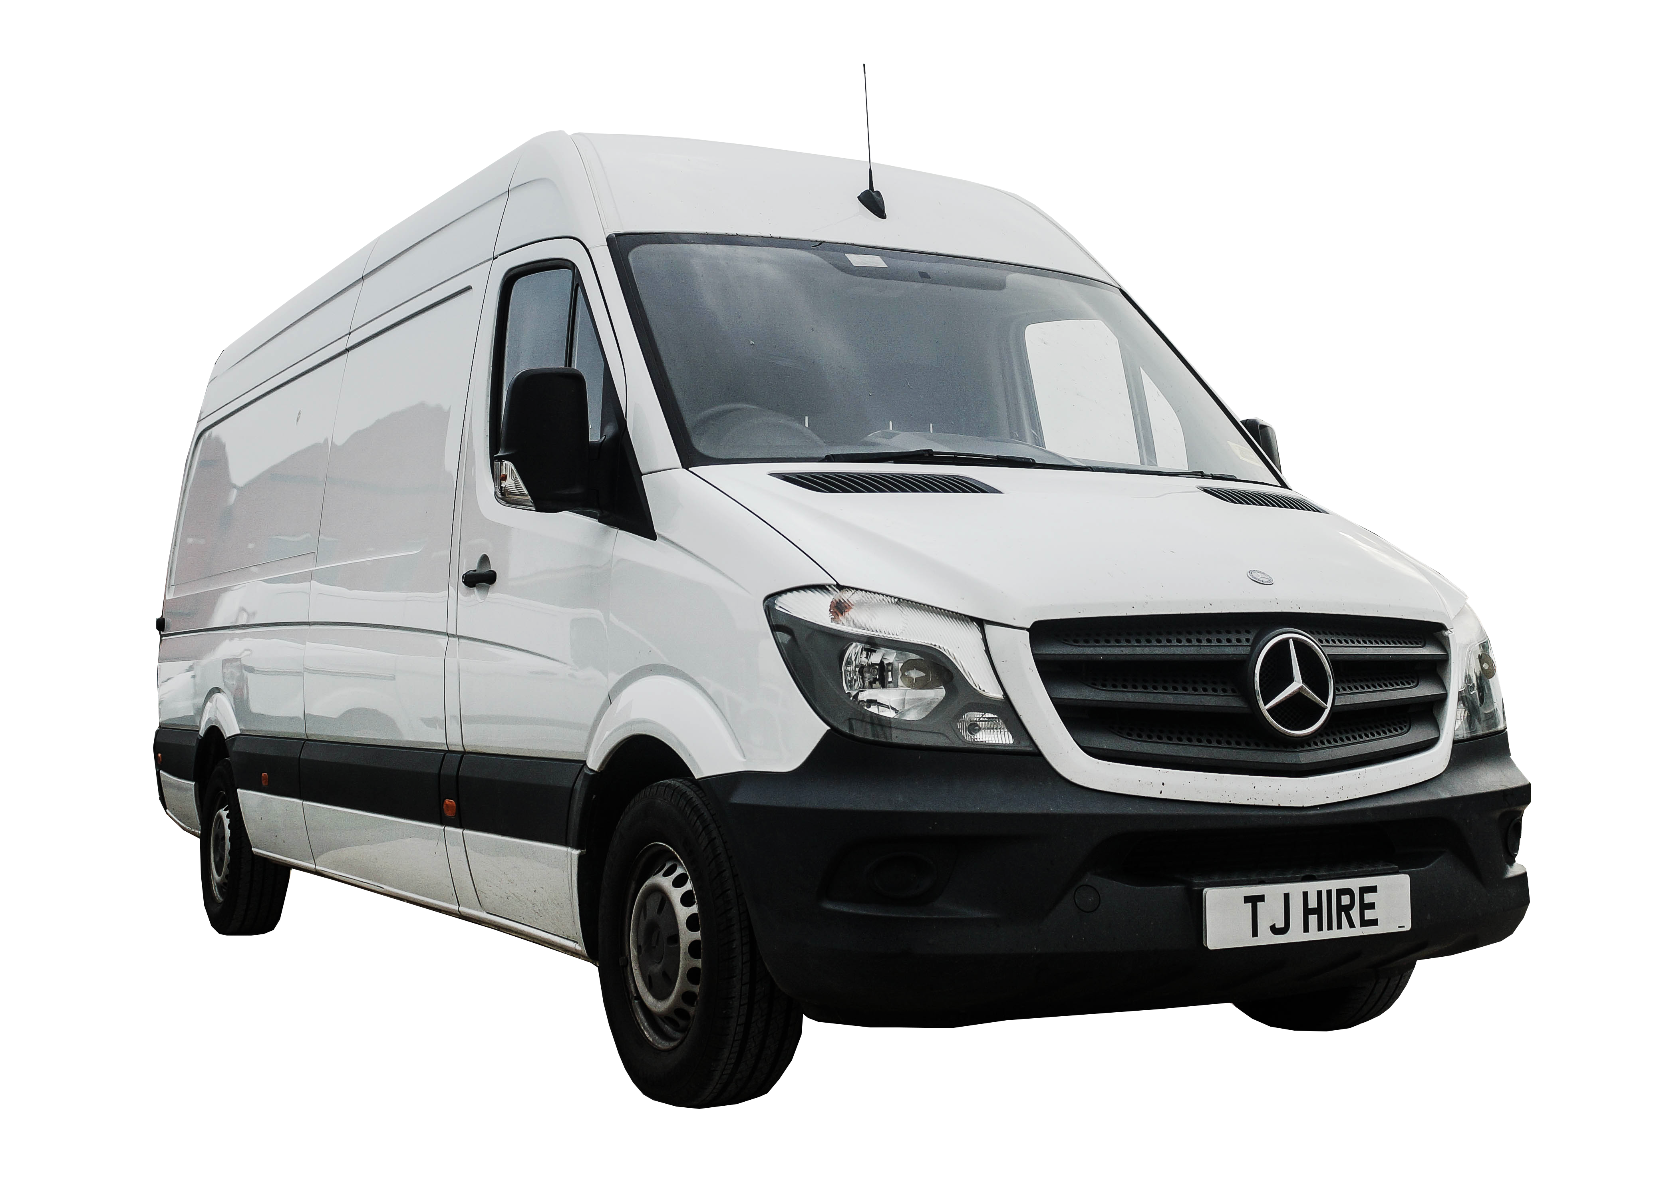 Sprinter extra long van for hire in Chippenham